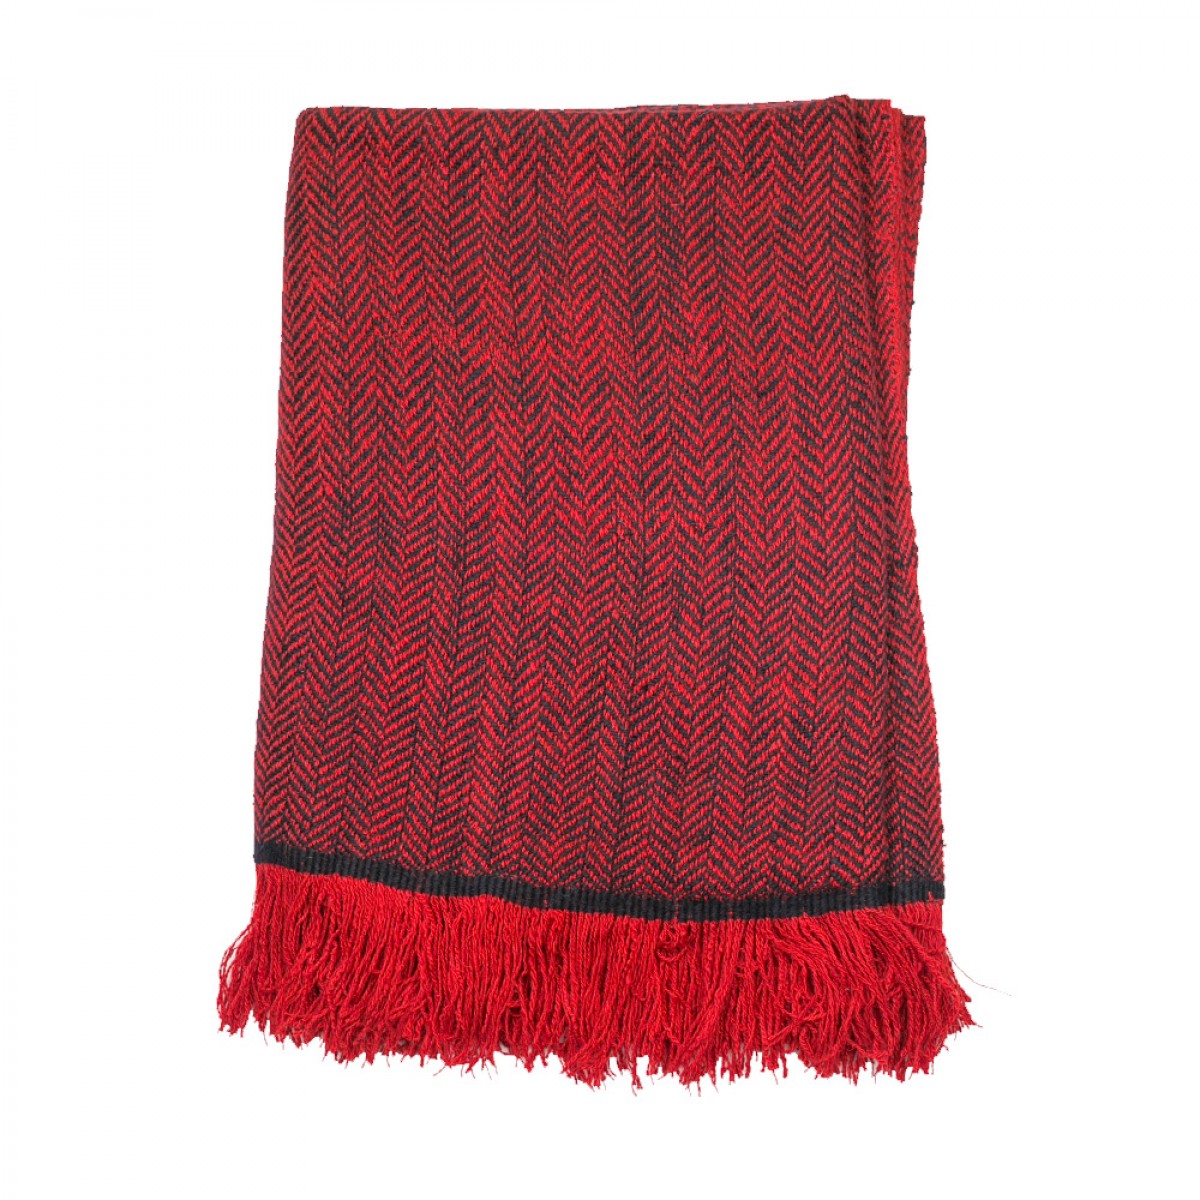 Red & Black Herringbone Cashmere Blanket (Made to Order)